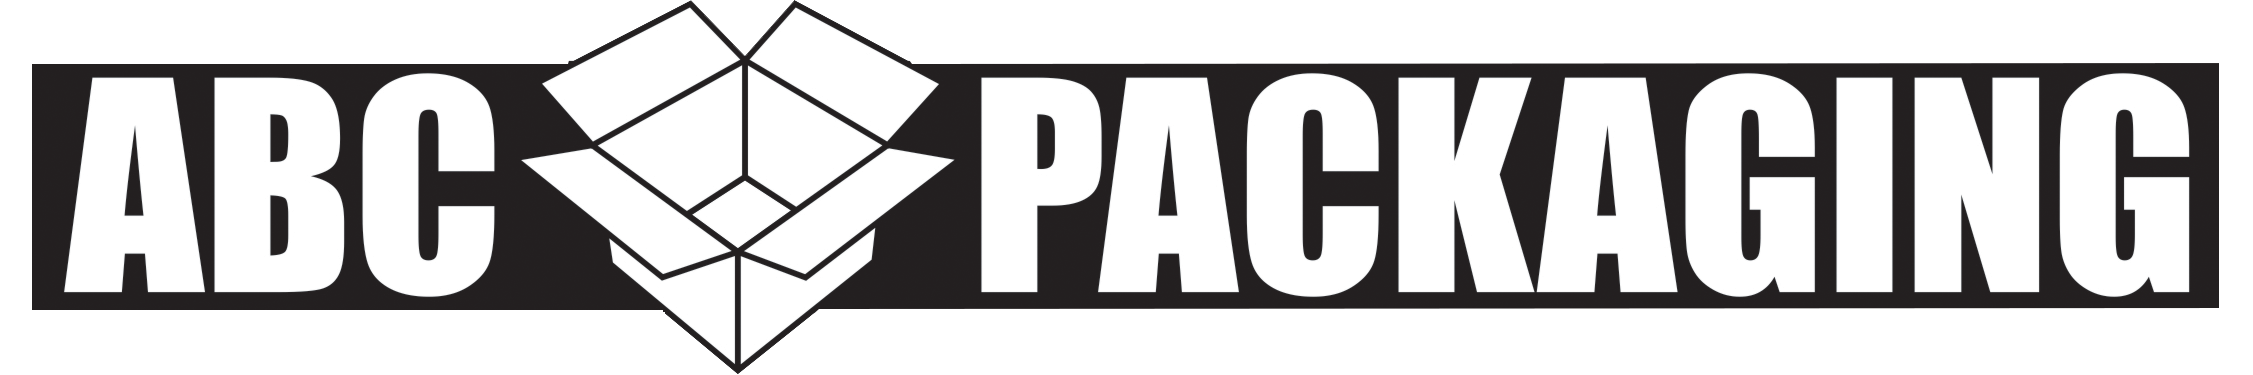 ABC Packaging Logo